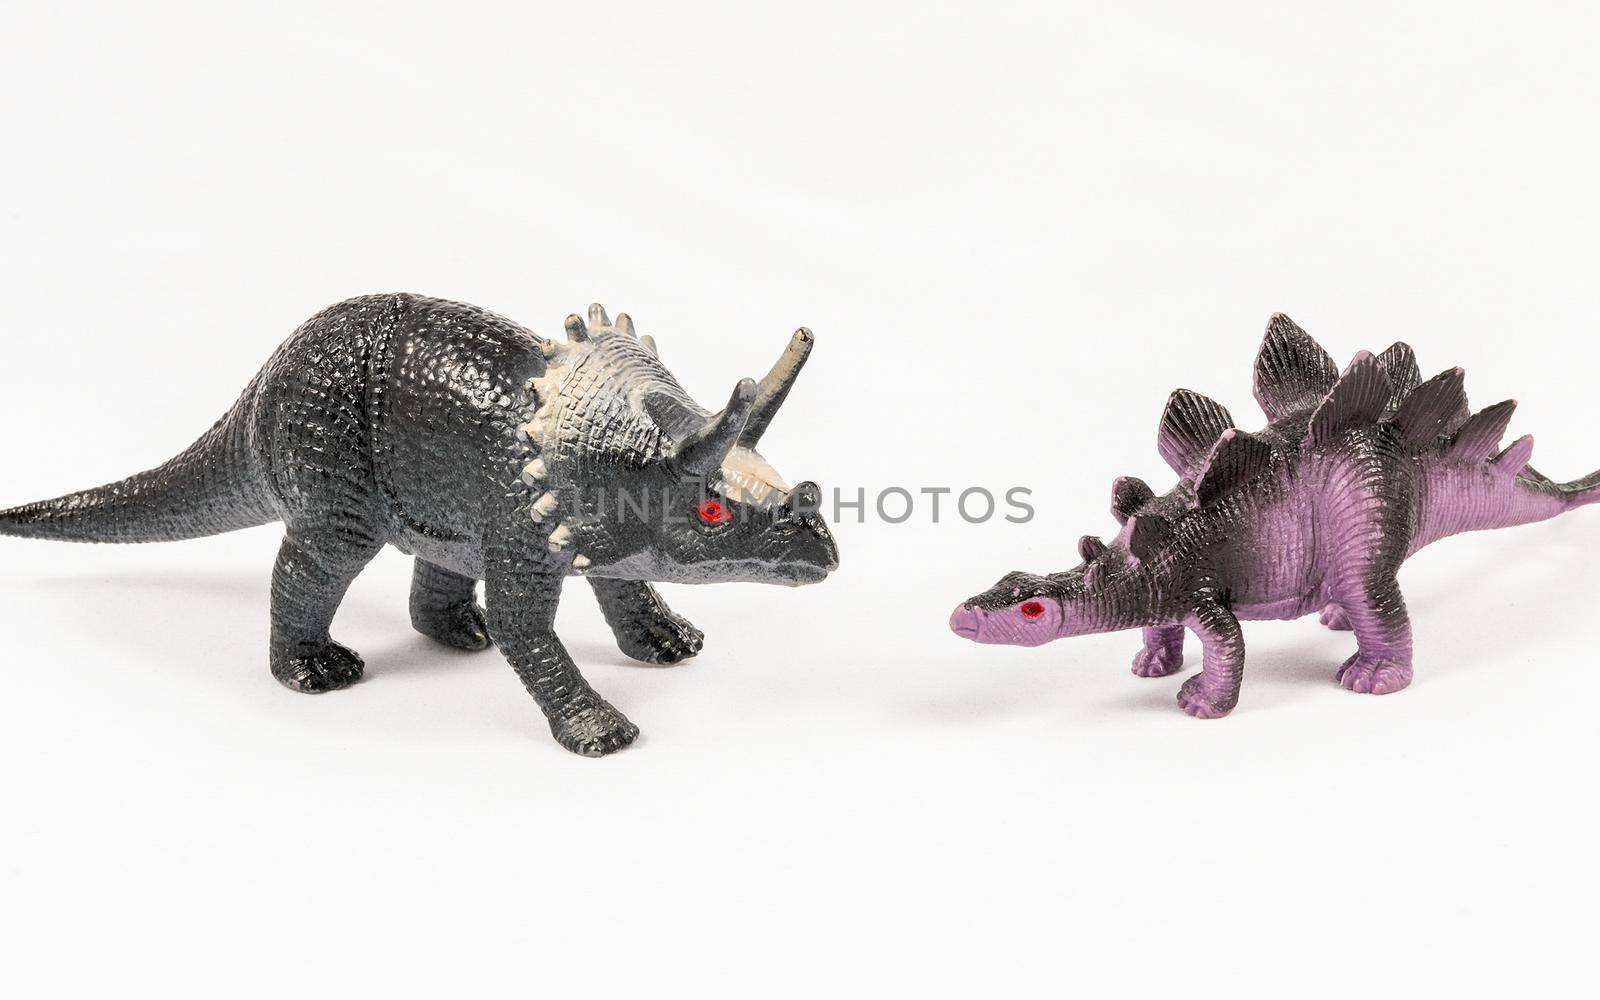 Stegosaurus and triceratops dinosaur toy models by marcorubino